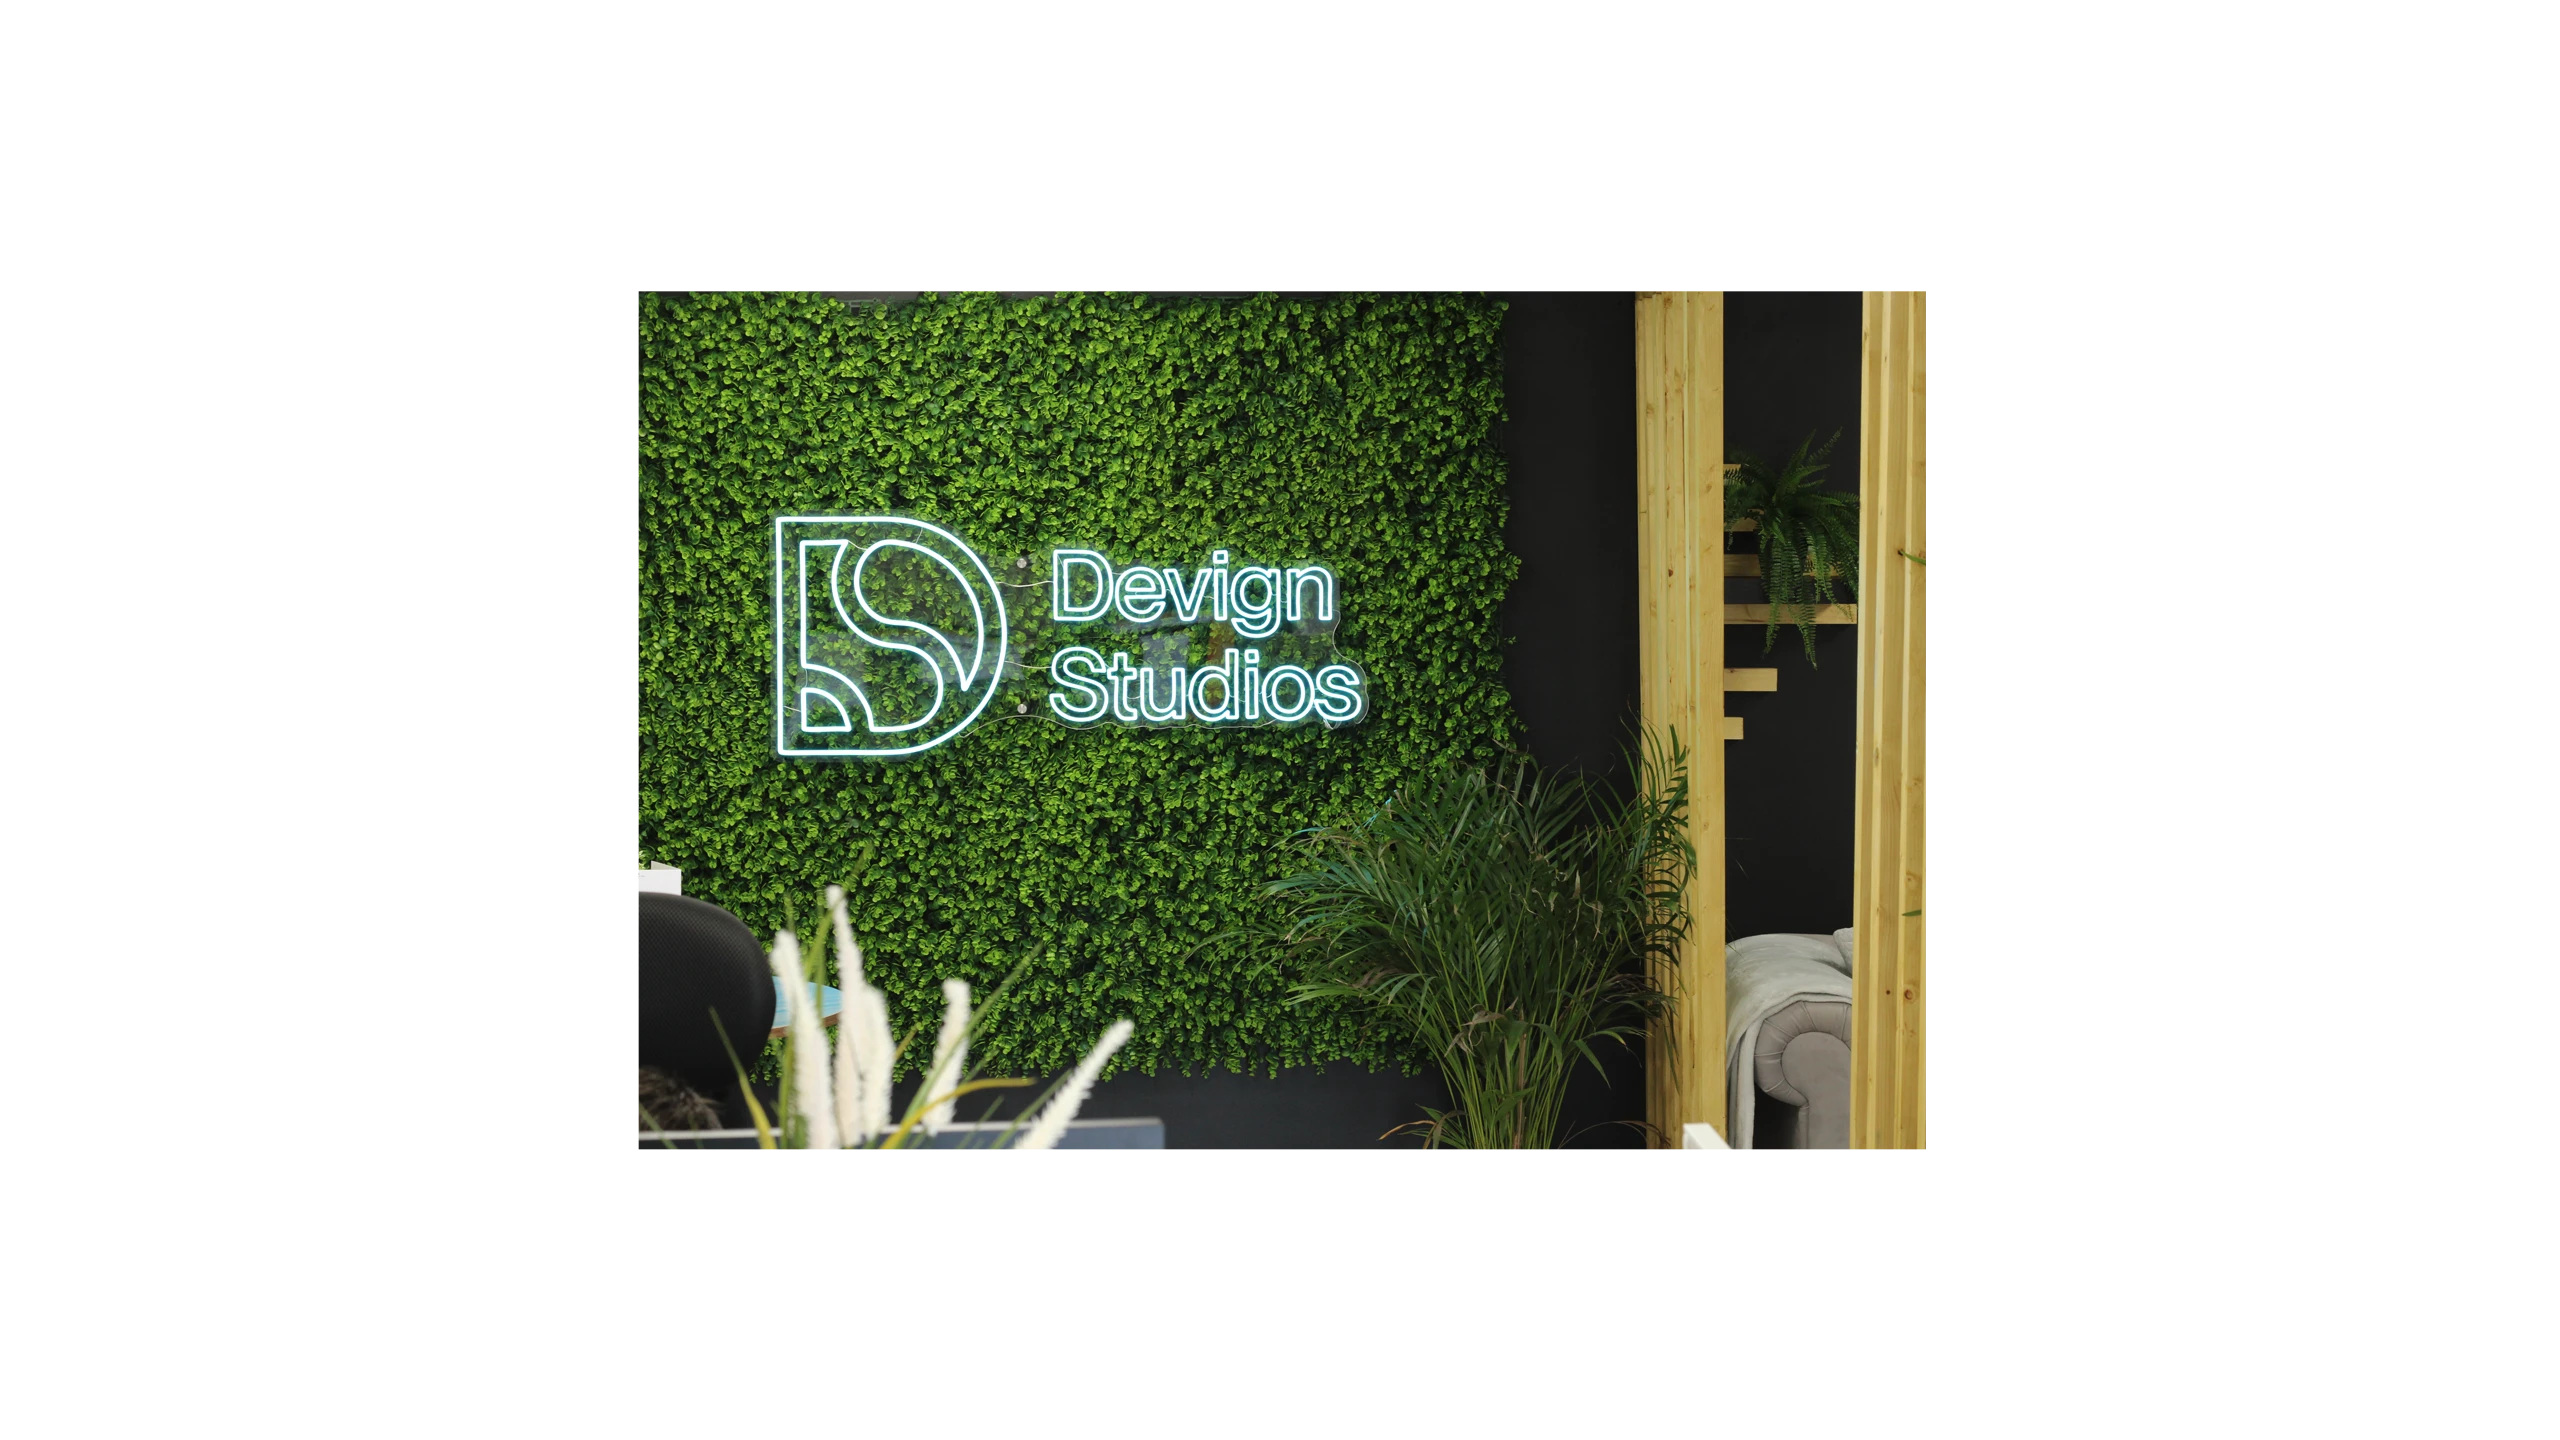 Devign Studios Signage Office